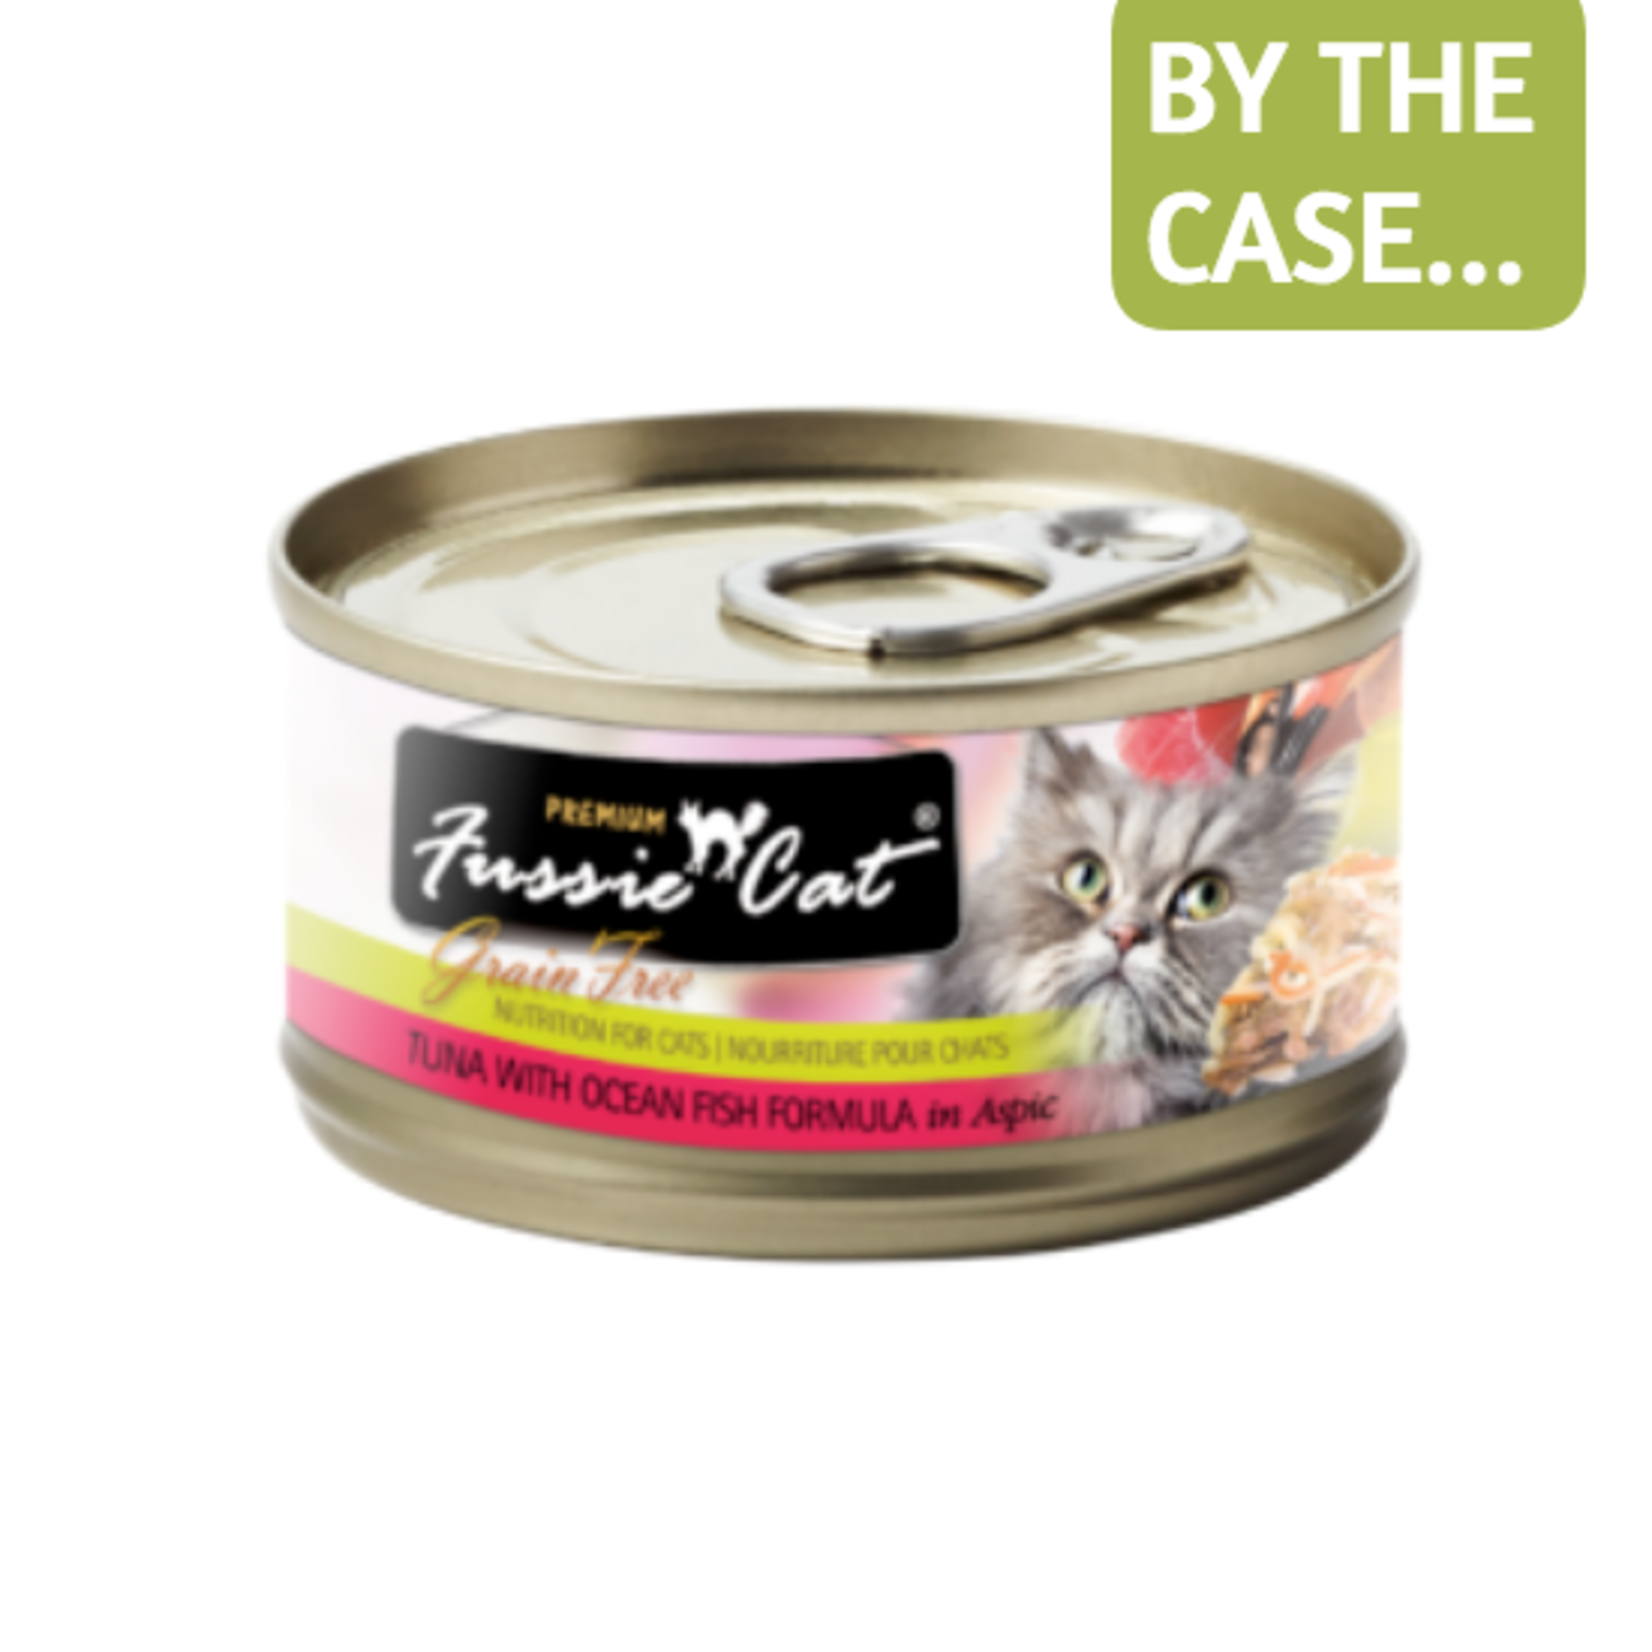 Fussie Cat Fussie Cat Wet Cat Food Tuna with Ocean Fish Formula in Aspic 2.8oz Can Grain Free